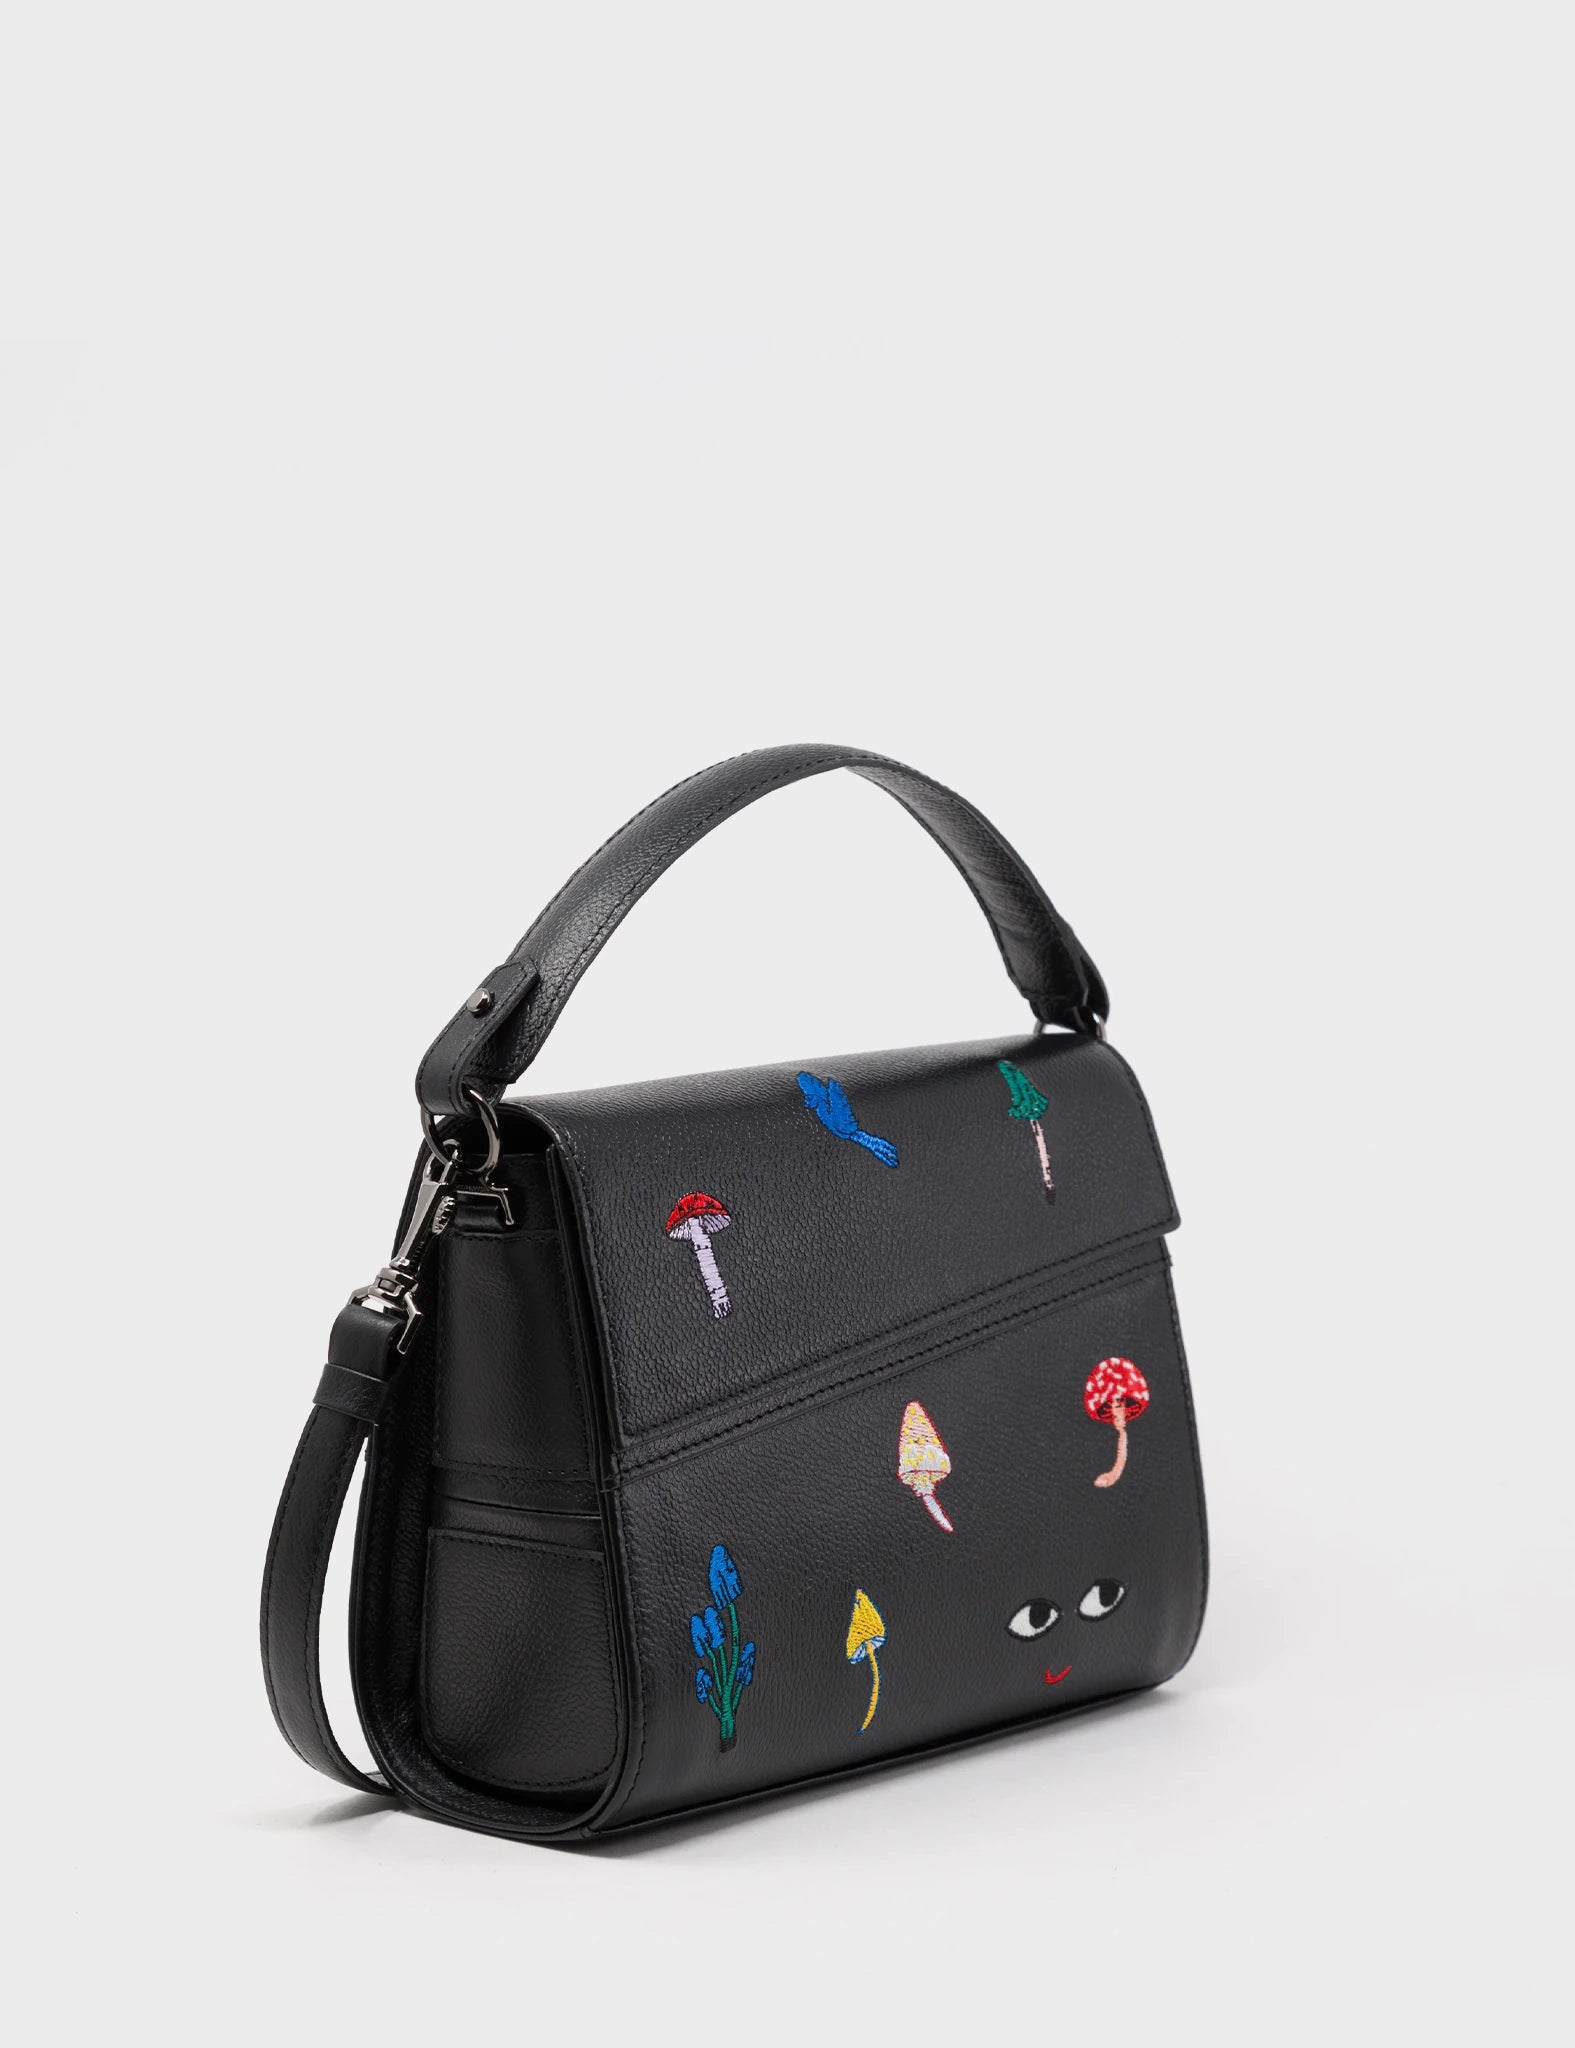 Anastasio Mini Crossbody Handbag Black Leather - Woodlands Embroidery